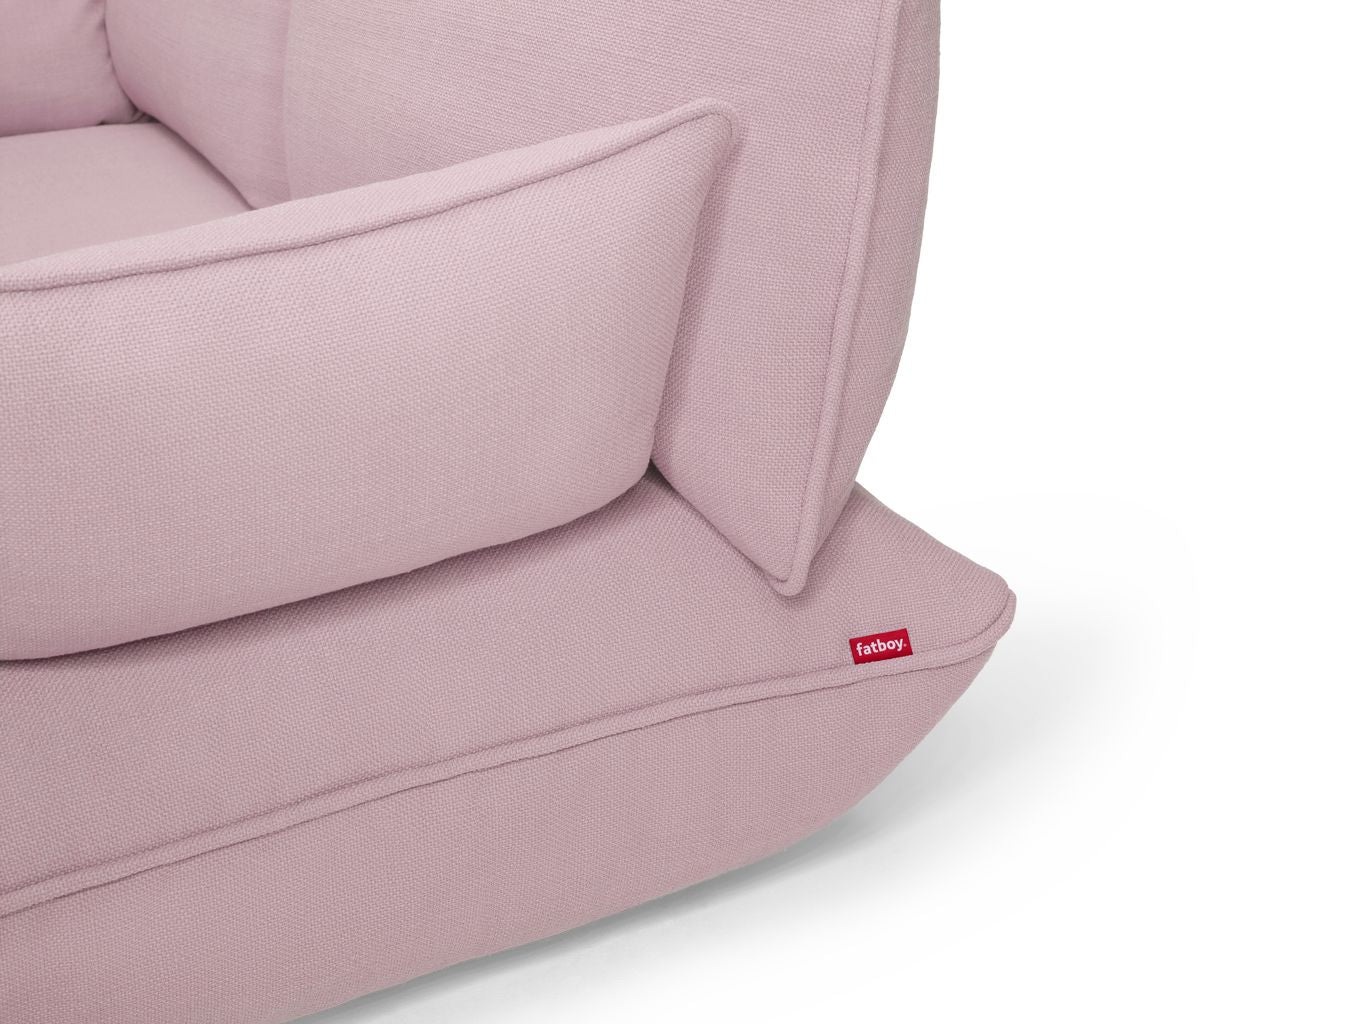 Fatboy Sumo Sofa Medium 3 Seater, Bubble Pink